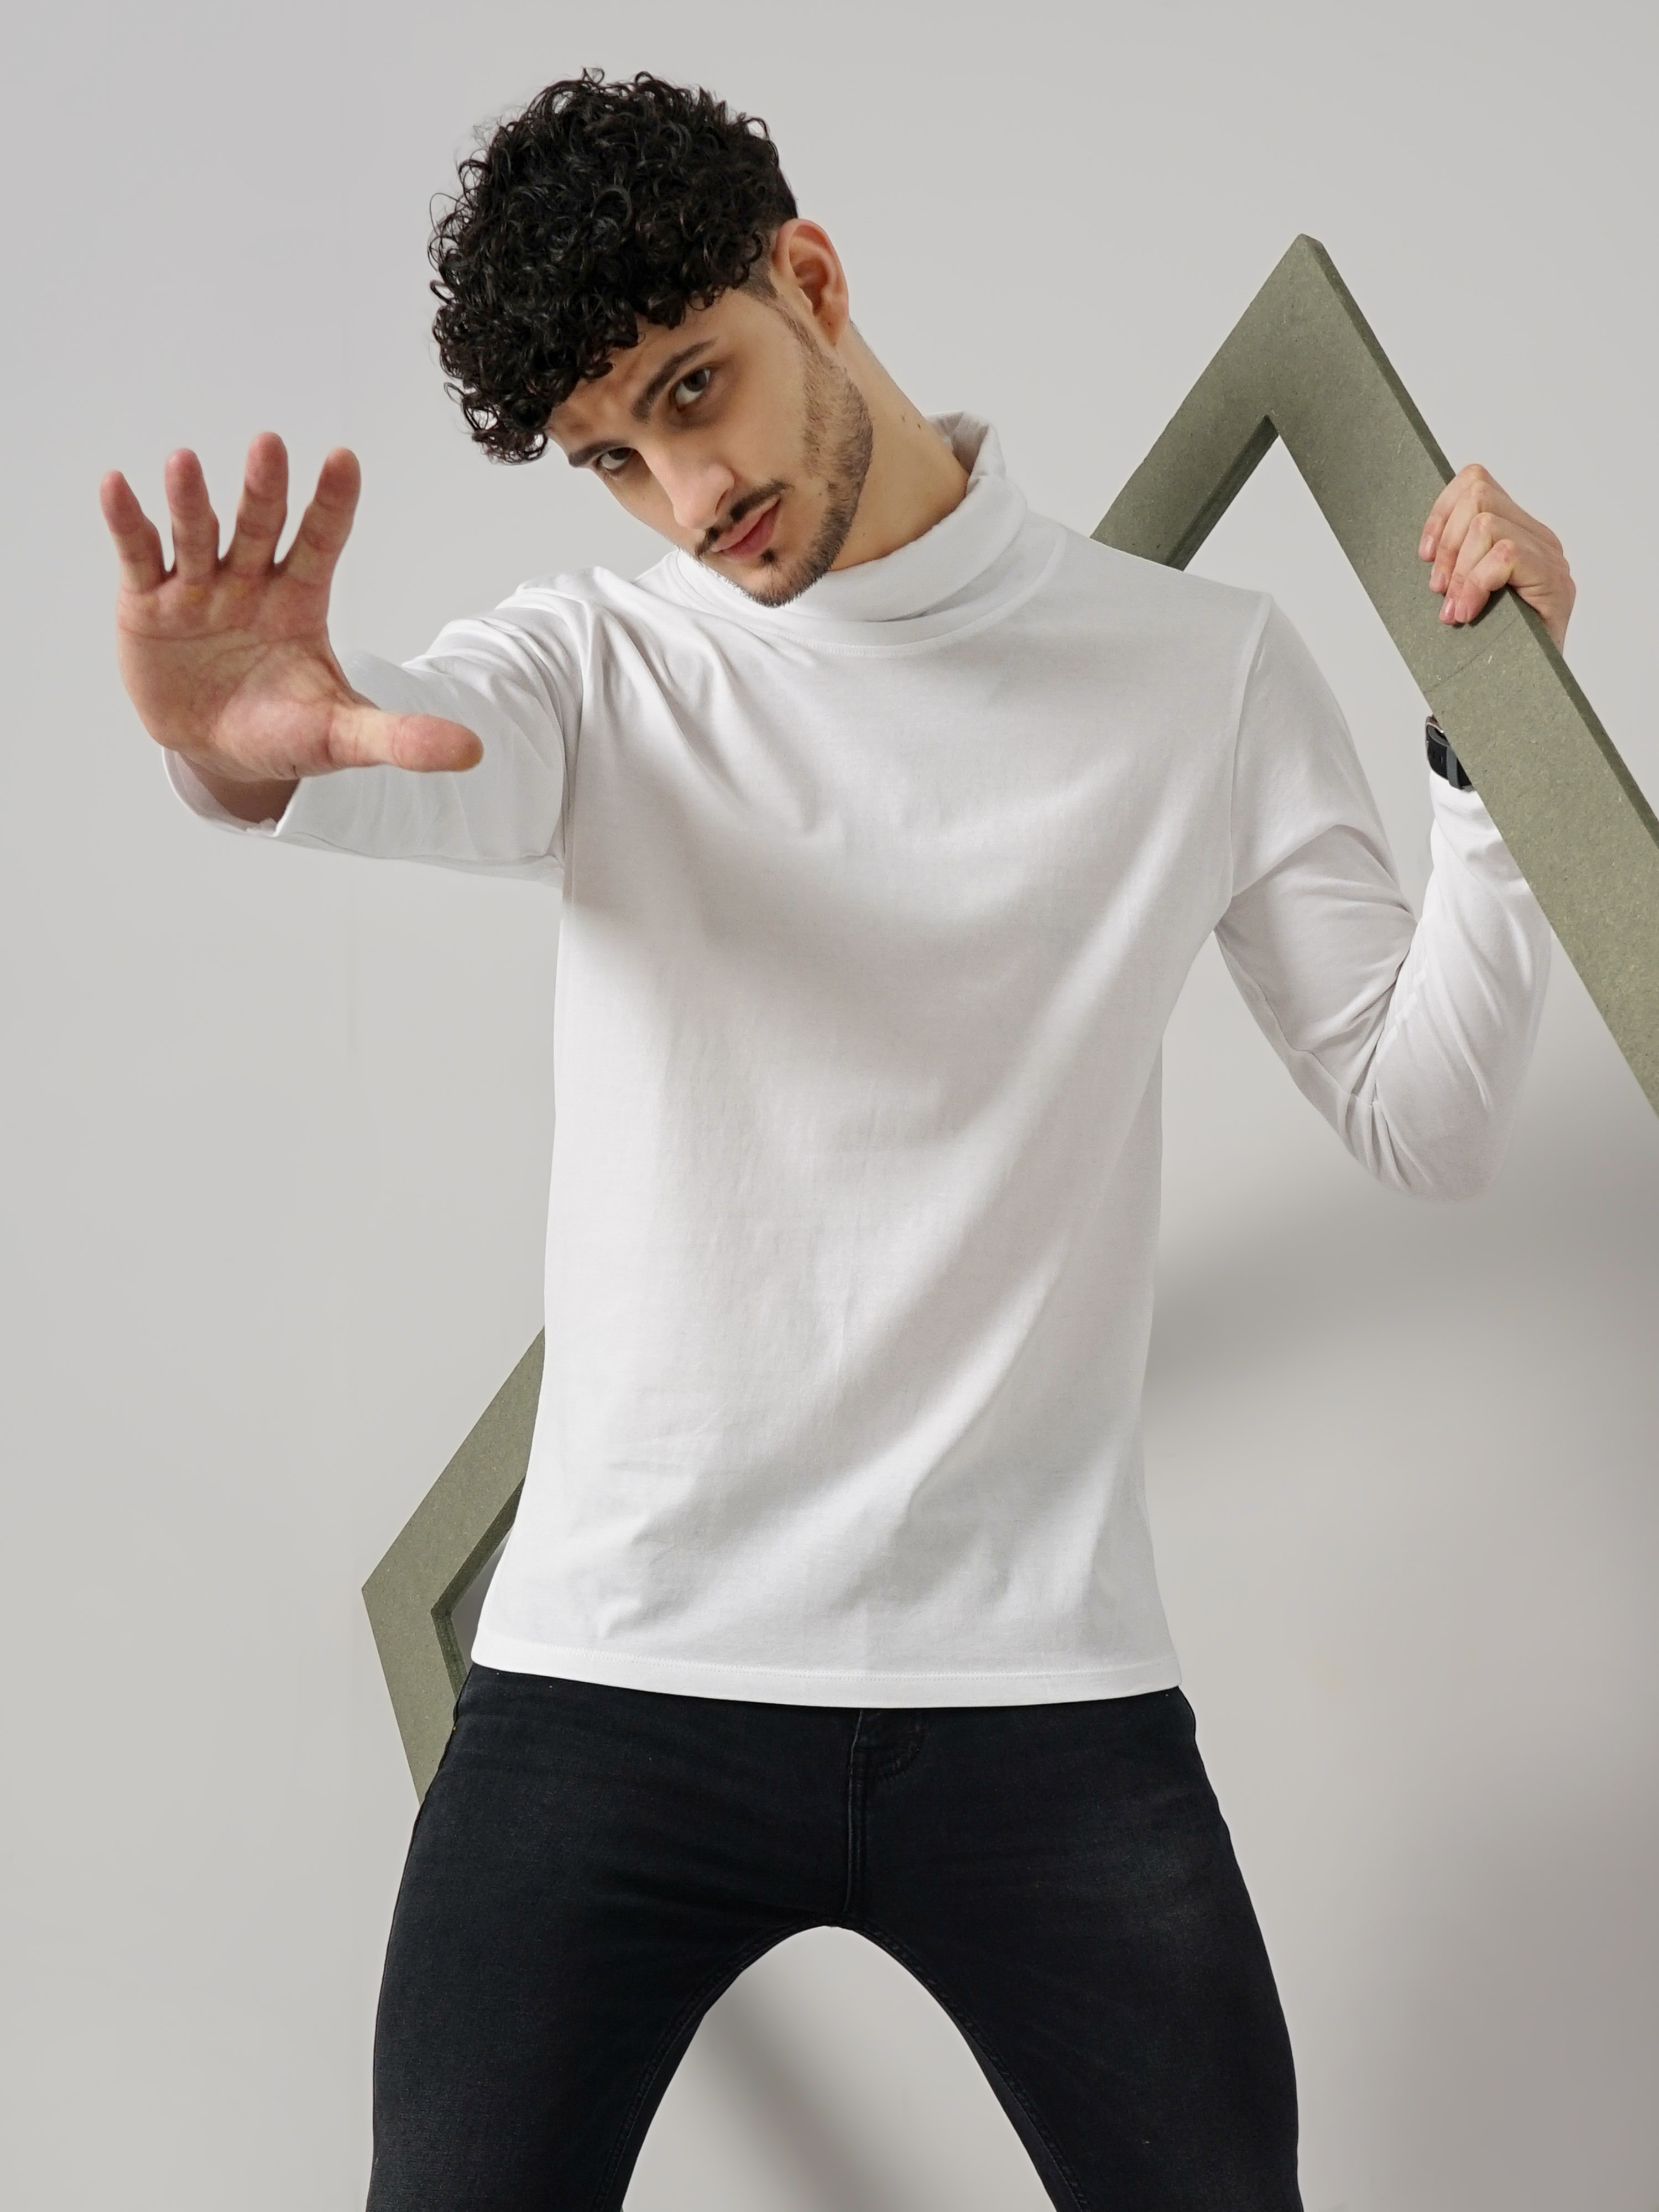 Celio Men's Solid White Full Sleeve Turtle Neck Fashion Tshirt